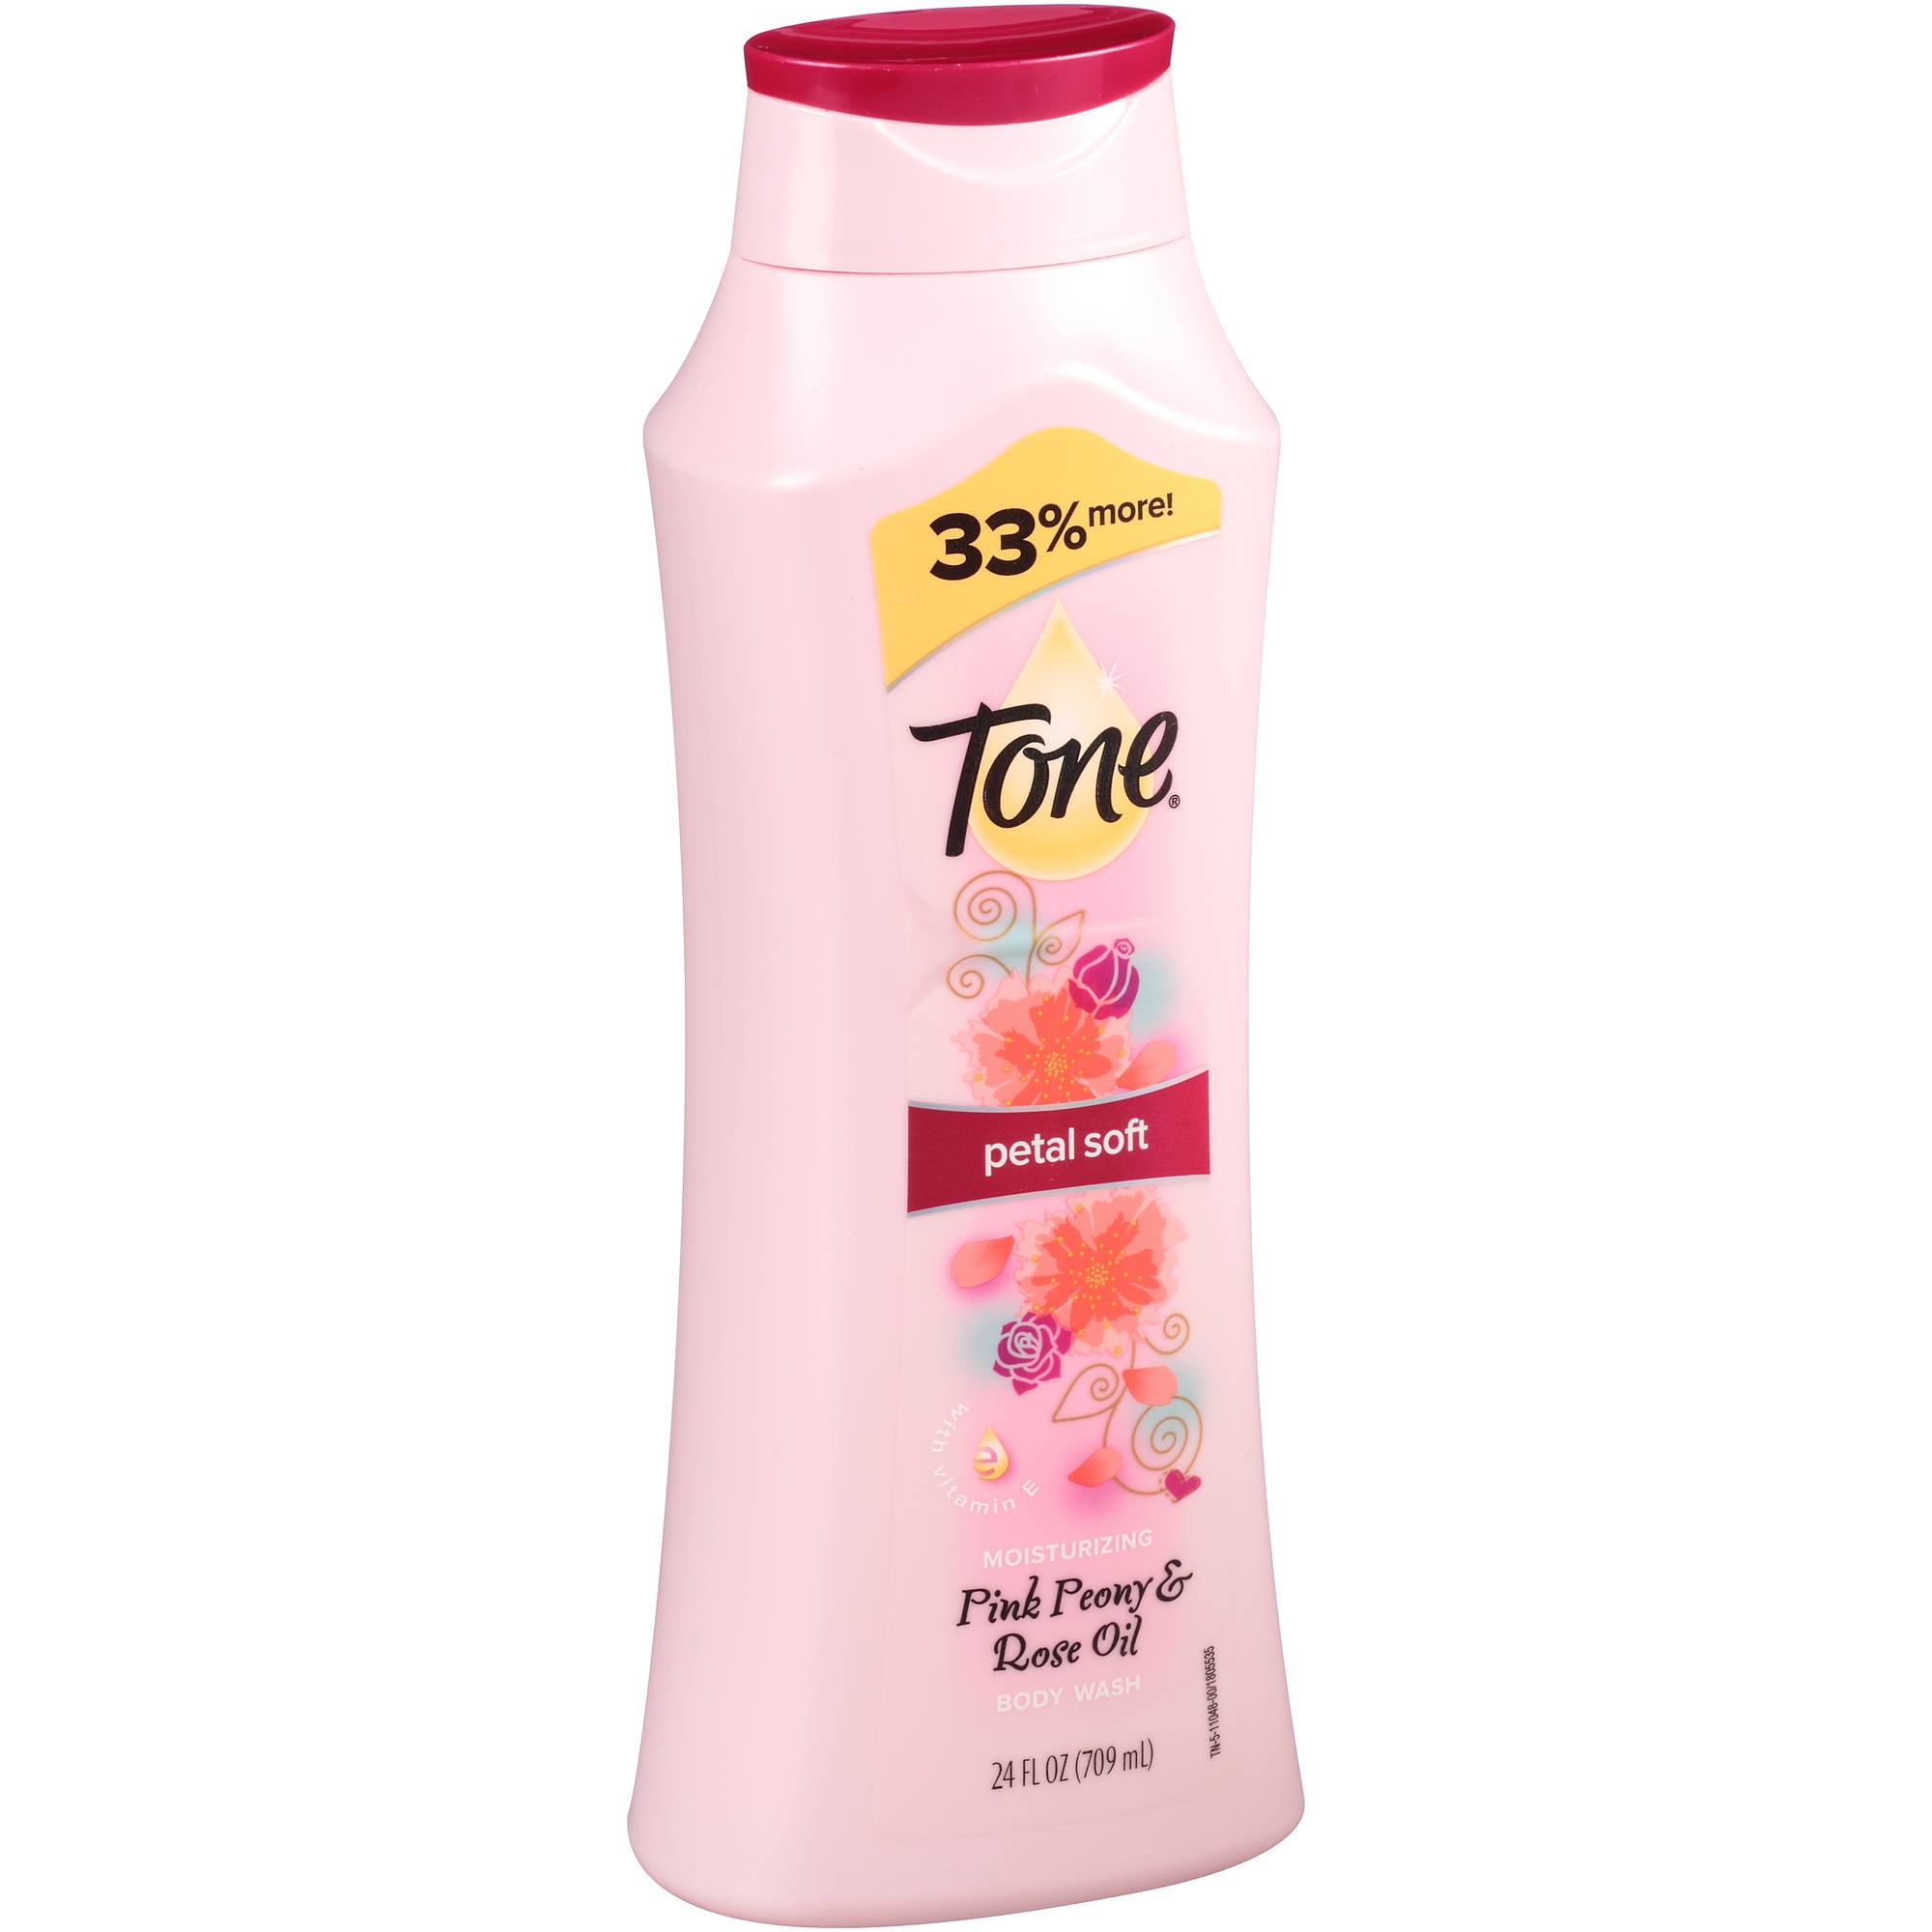 Tone Petal Soft Pink Peony & Rose Oil Body Wash, 24 fl oz - Walmart.com